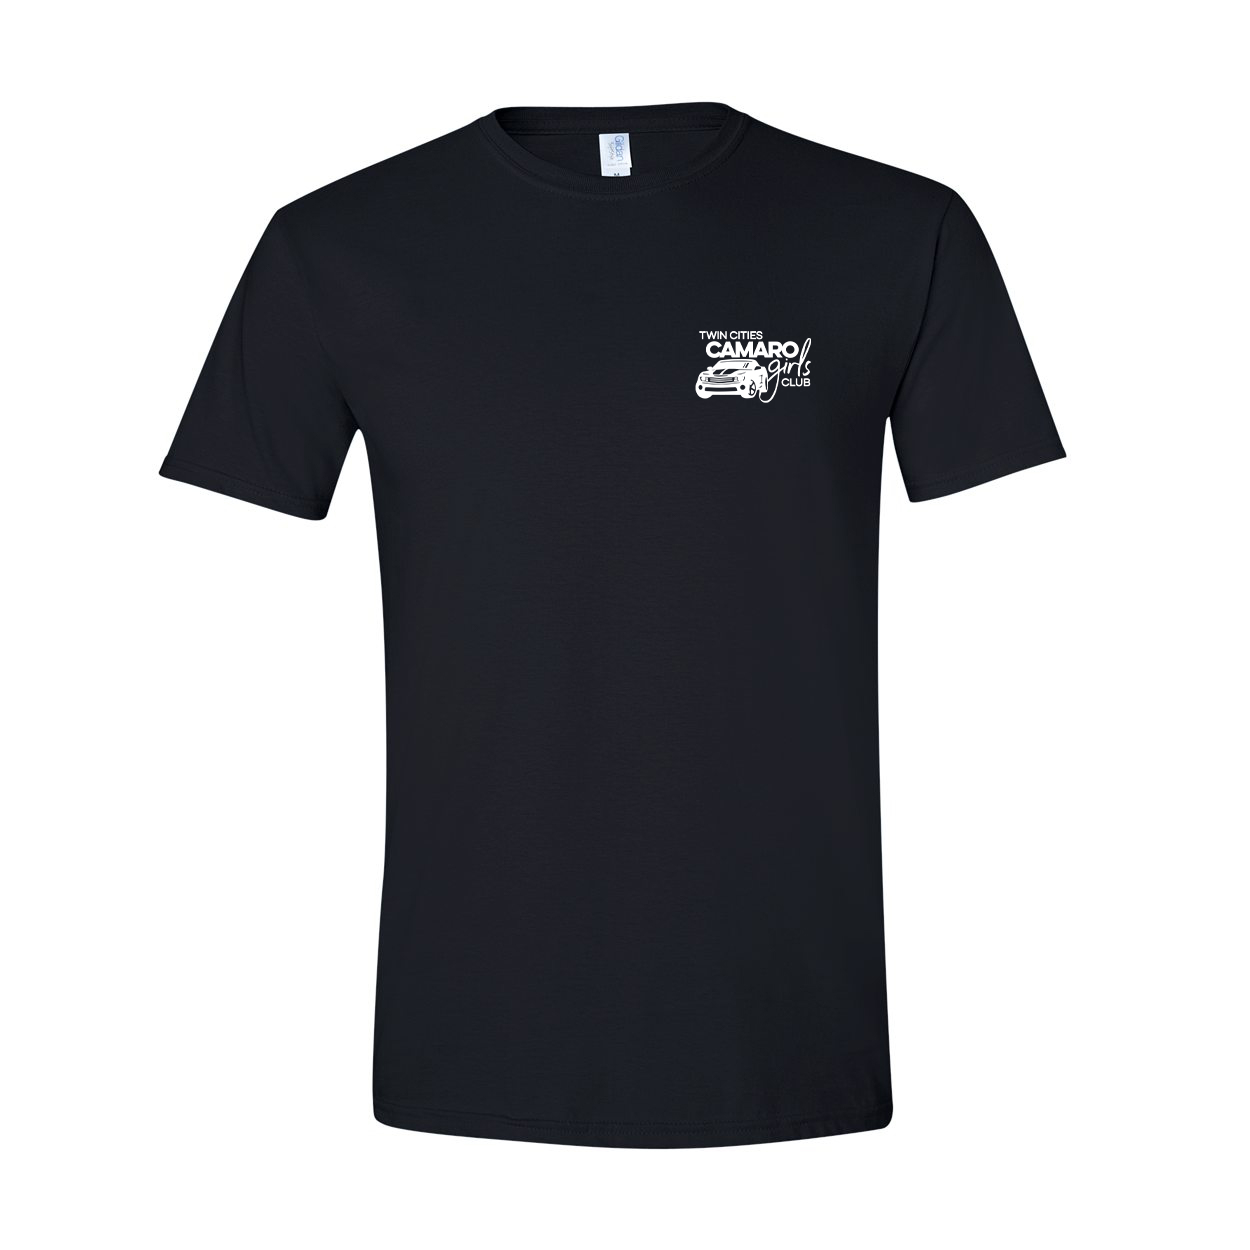 Twin Cities Camaro Girls Club Night Out T-Shirt Black (White Logo)